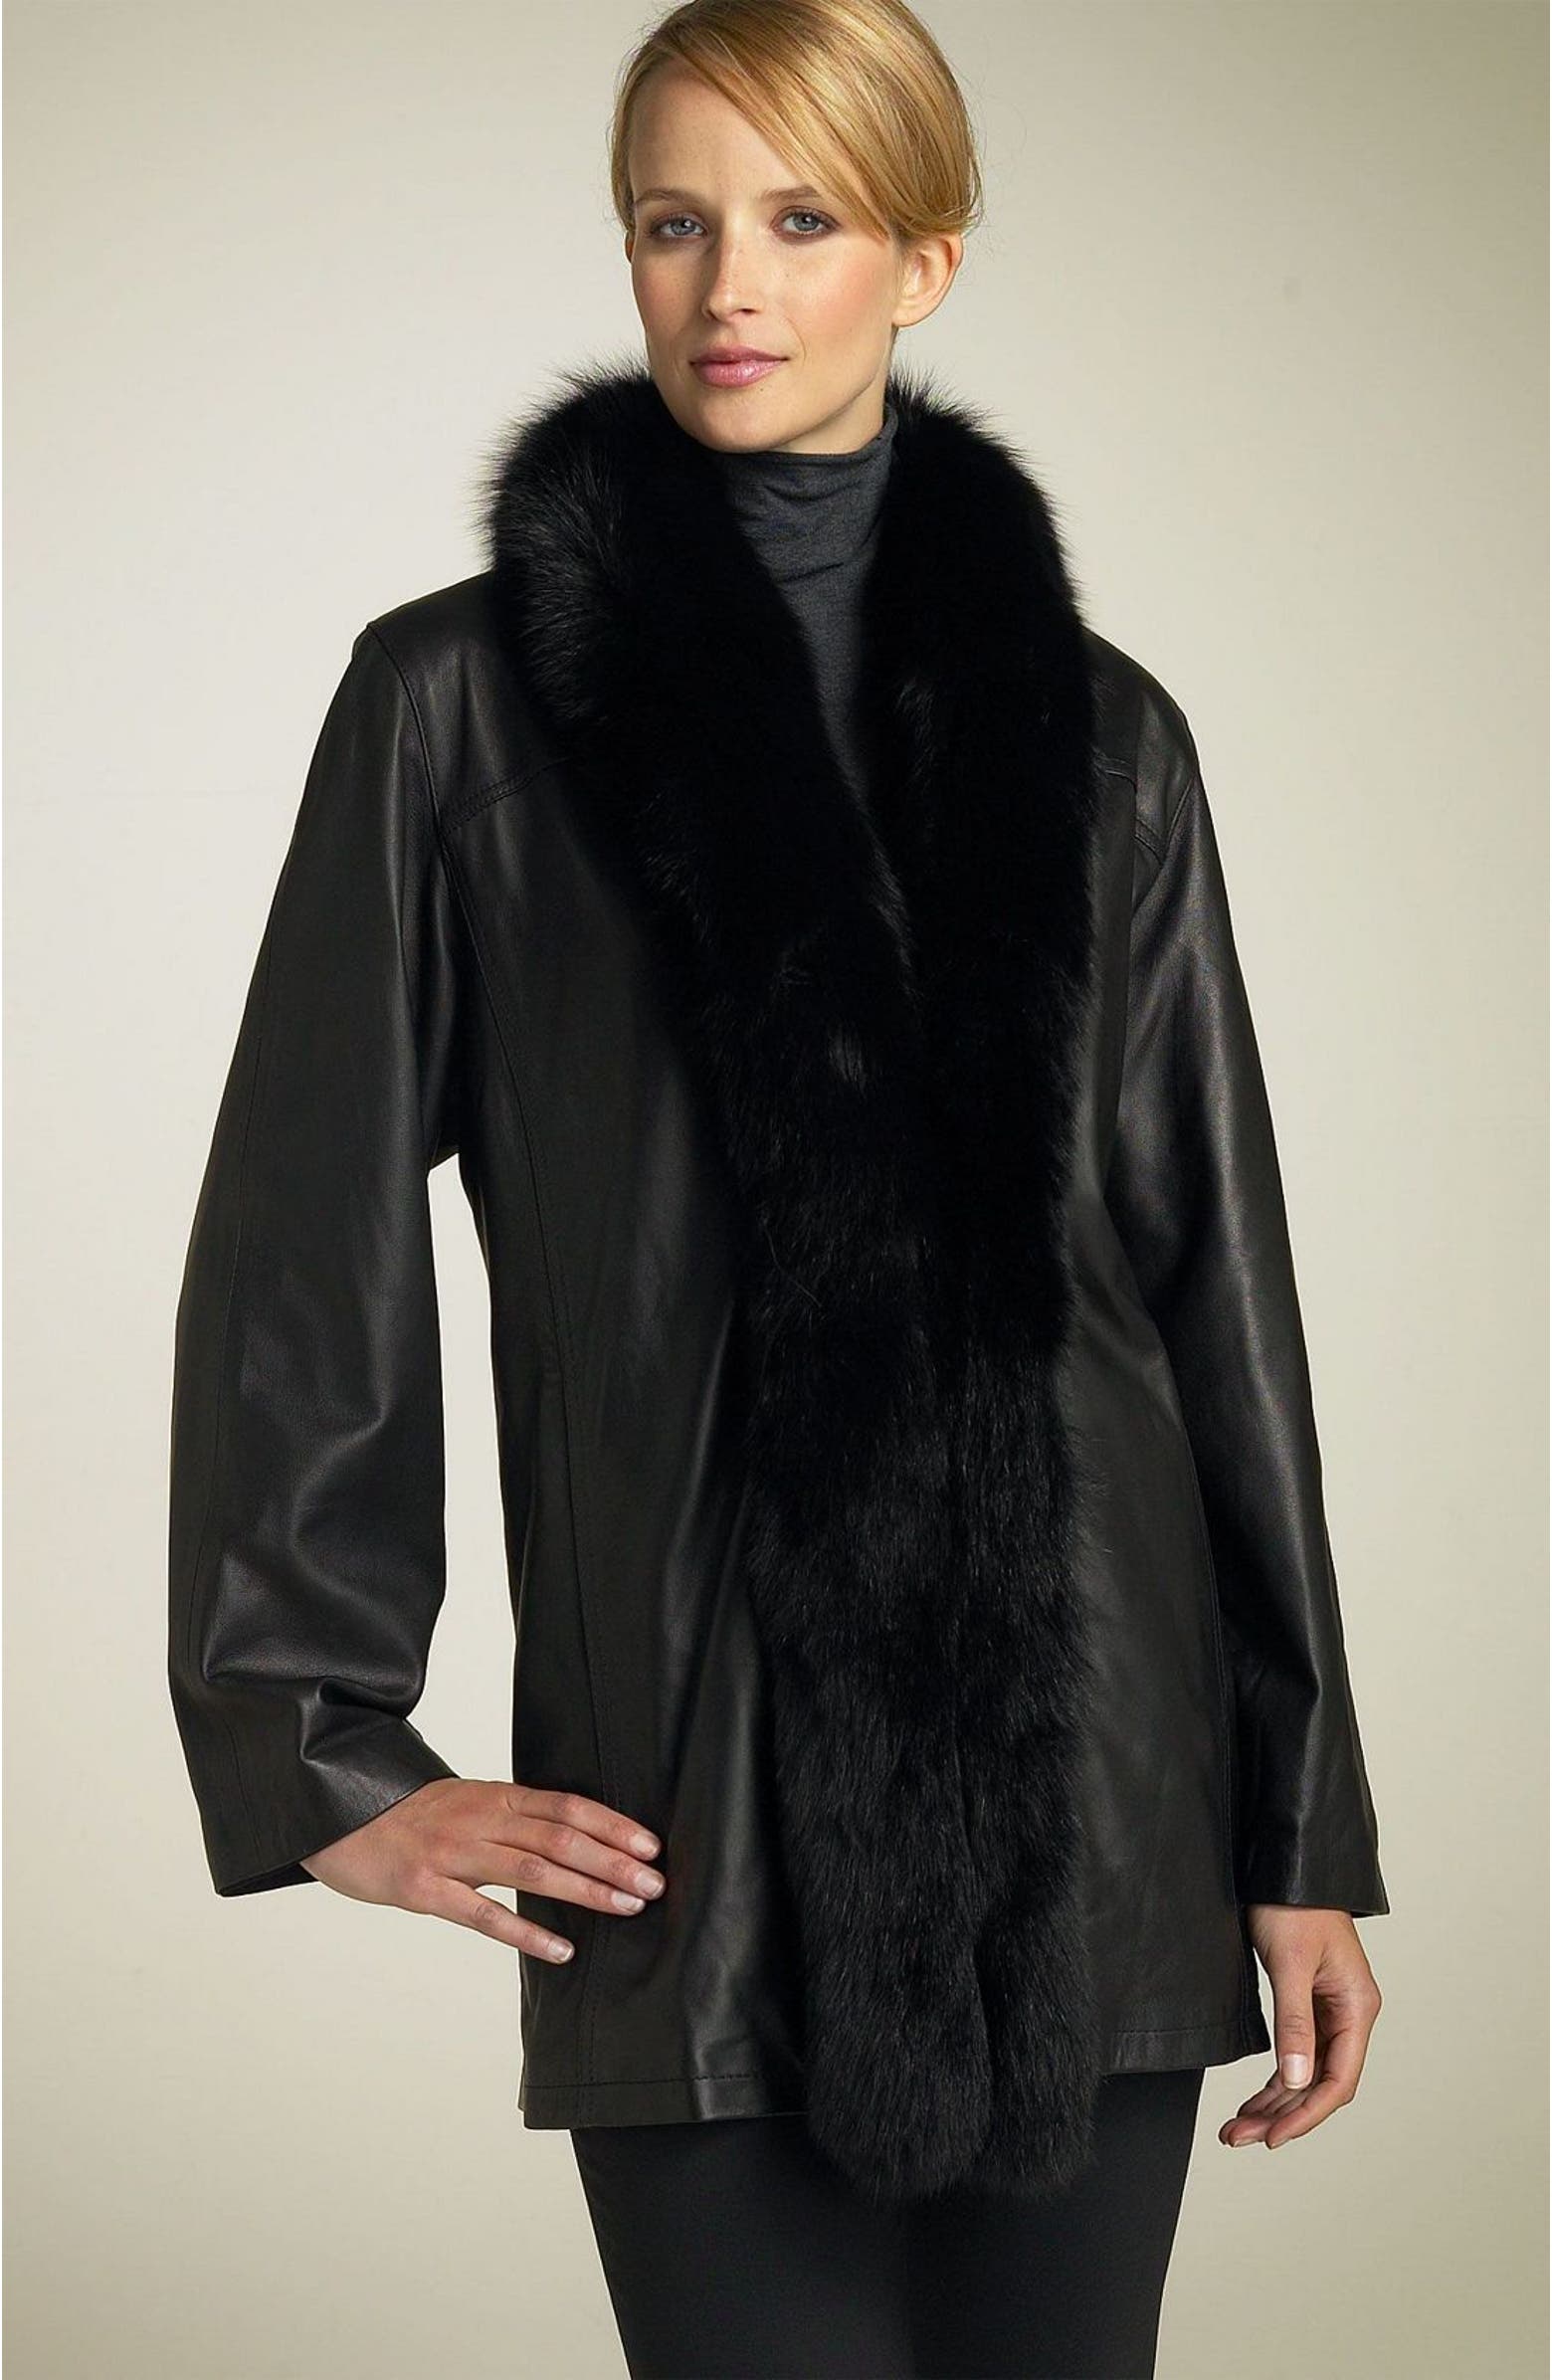 Chosen Furs Reversible Leather Coat With Fox Fur Trim Nordstrom